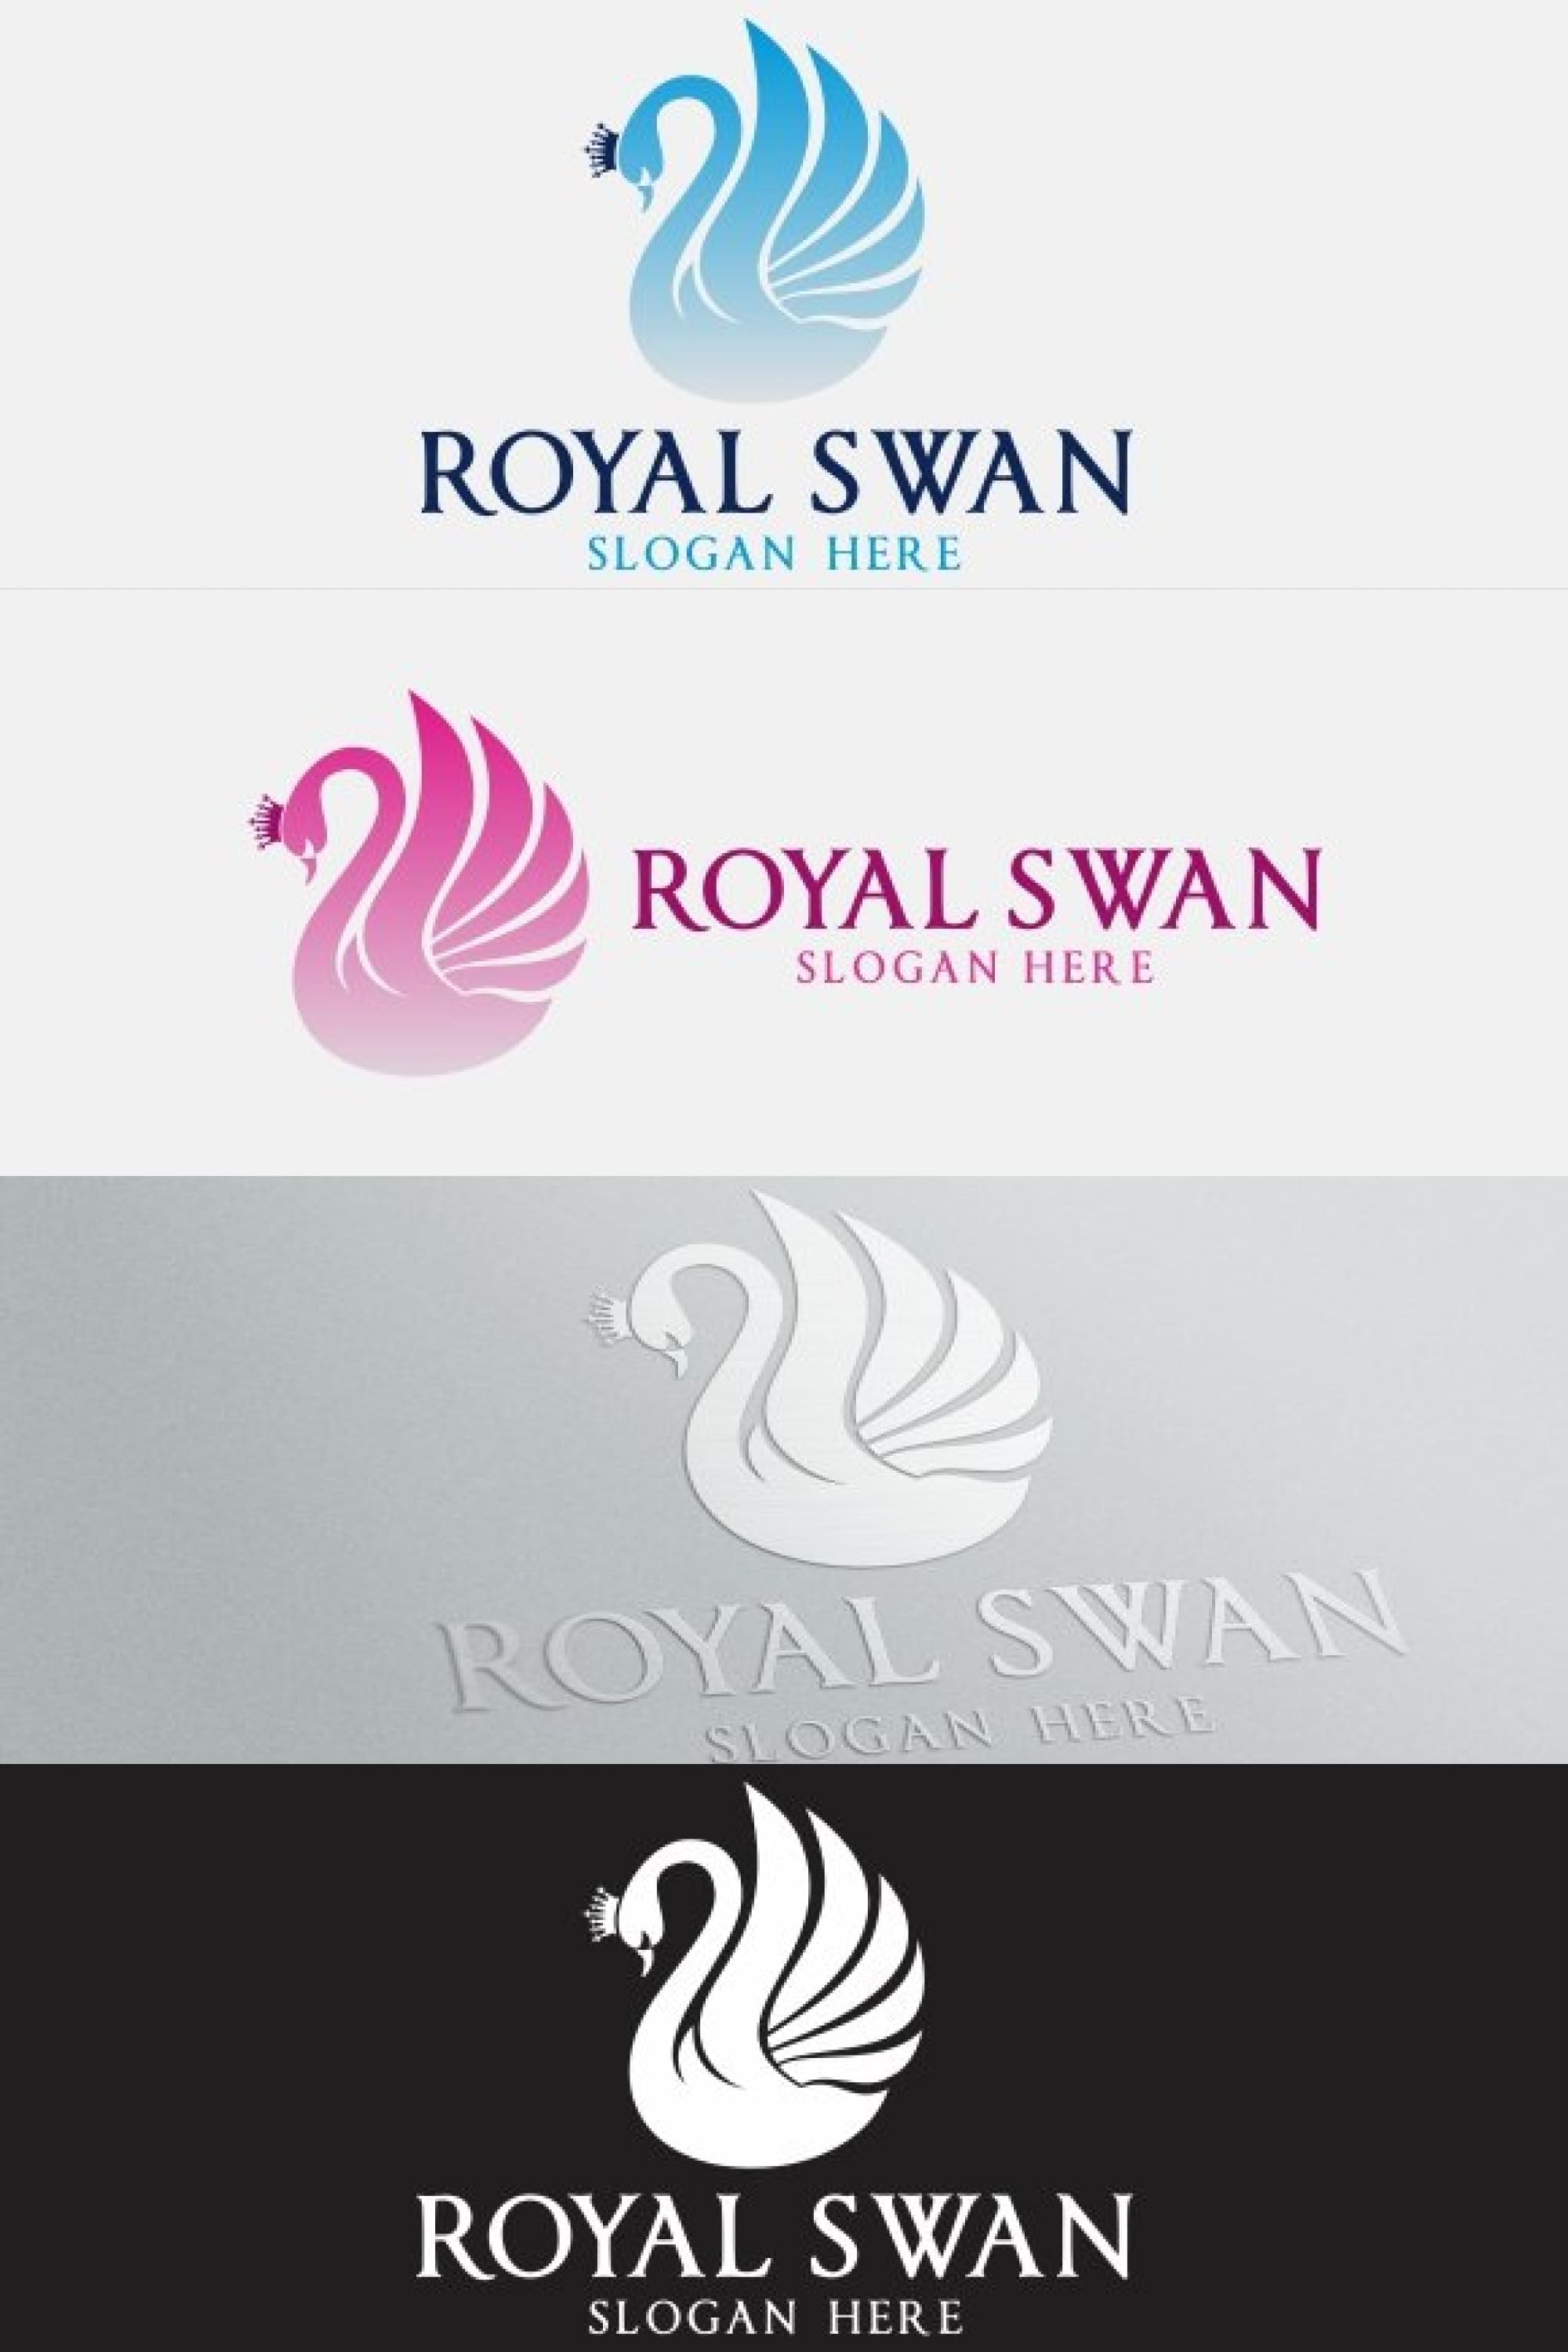 royal swan logo pinterest